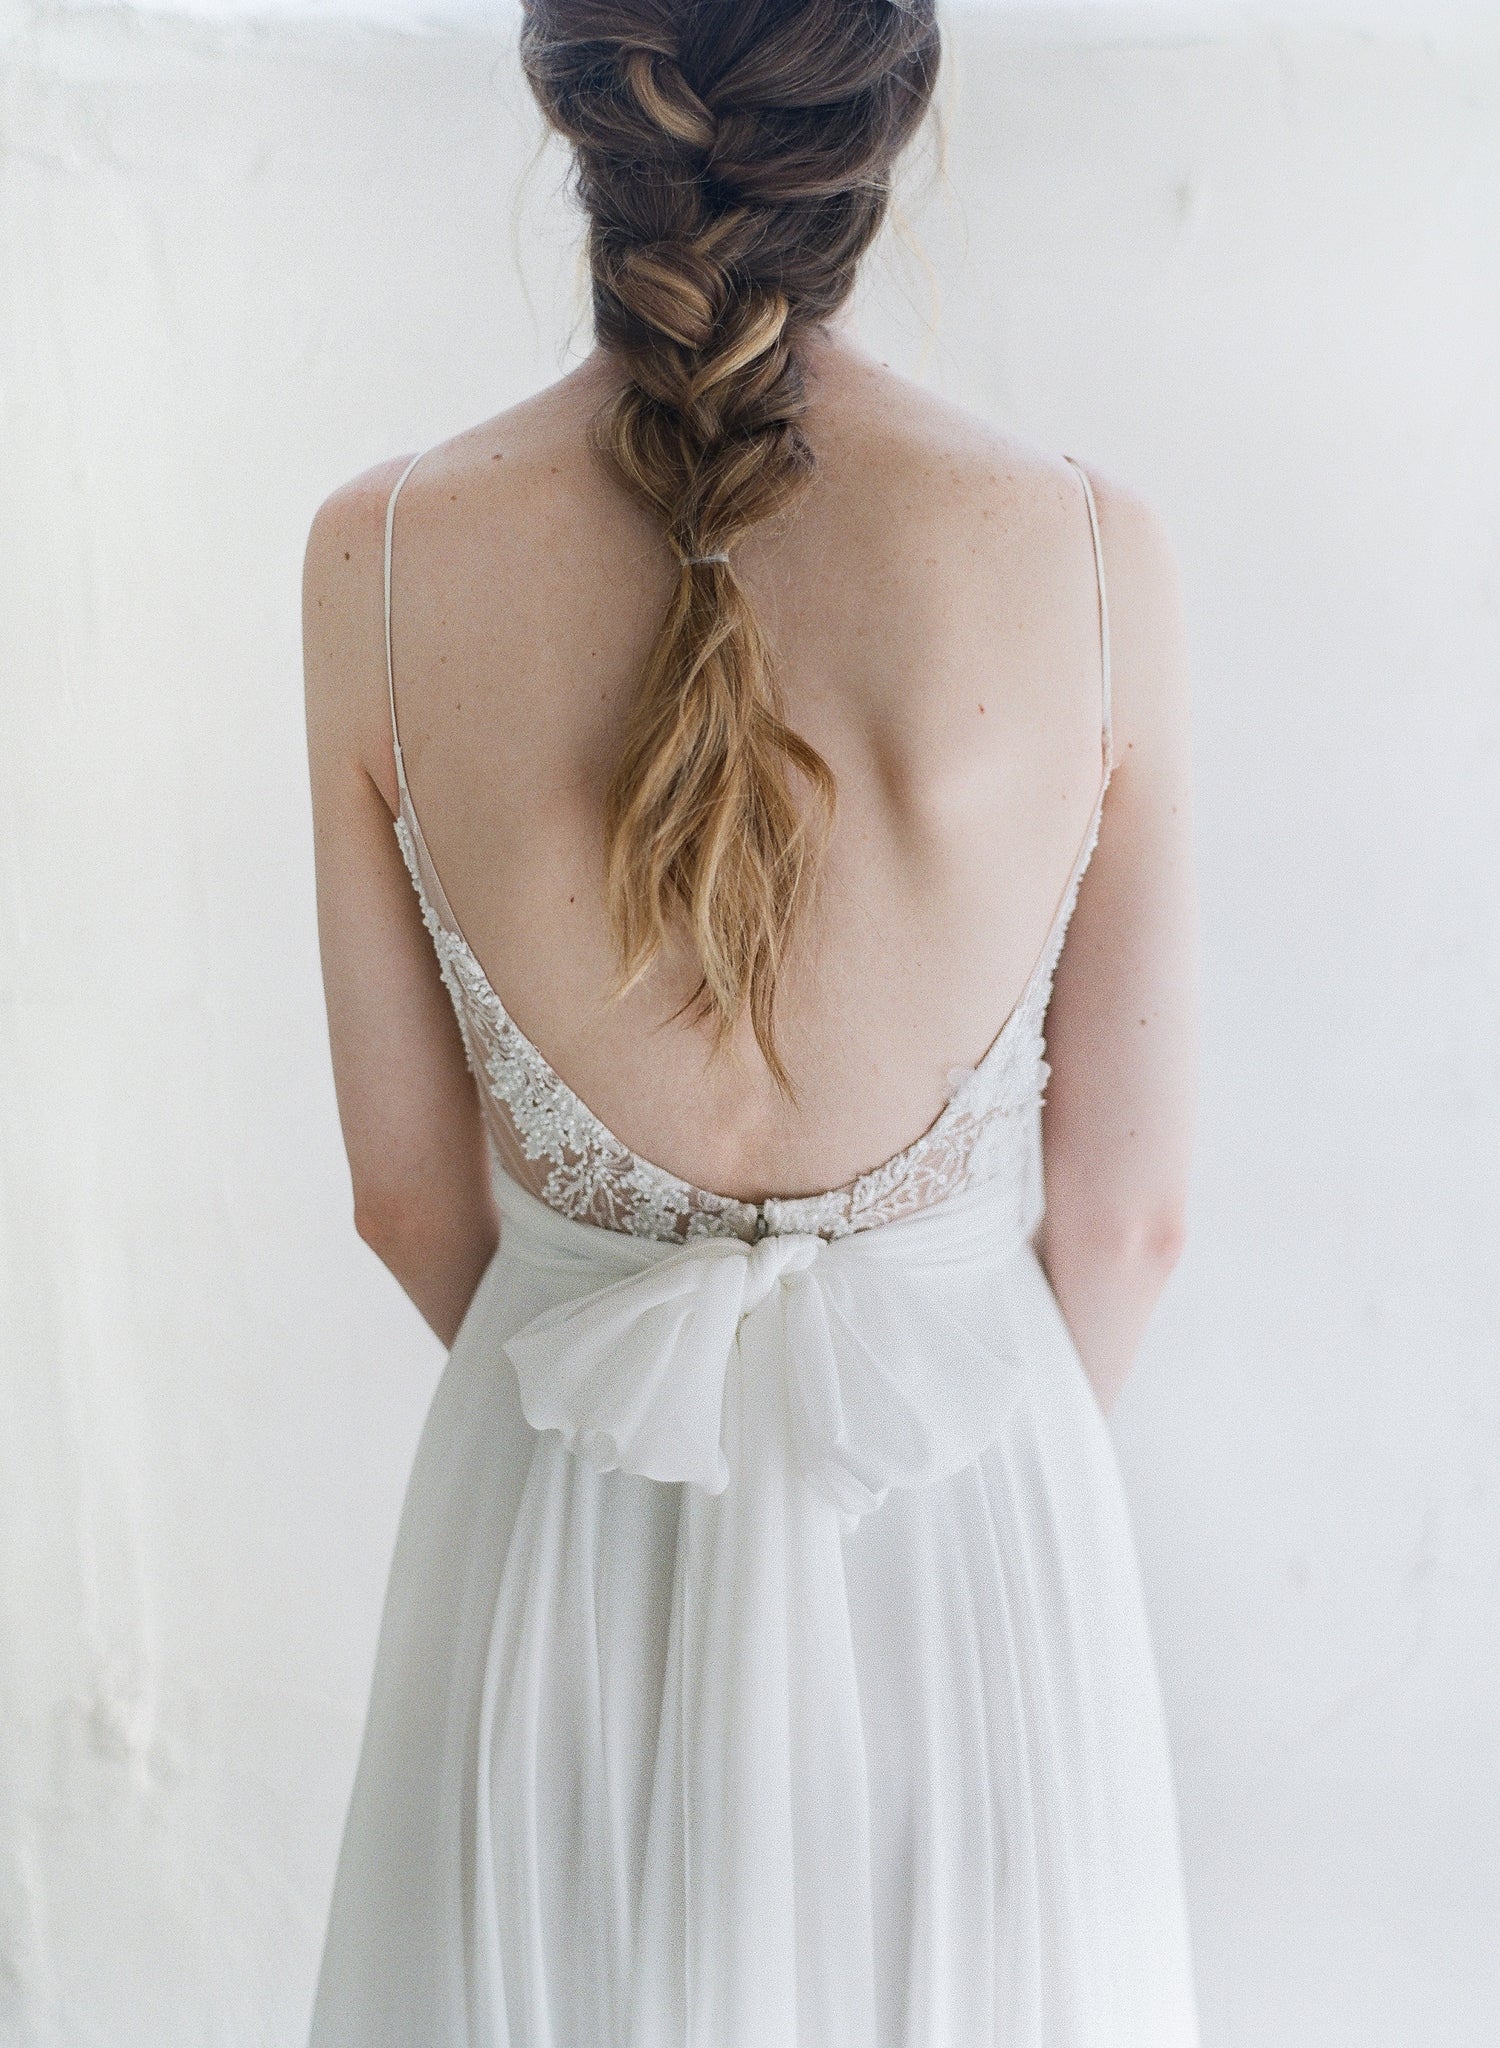 Flowy chiffon dress sash in off-white